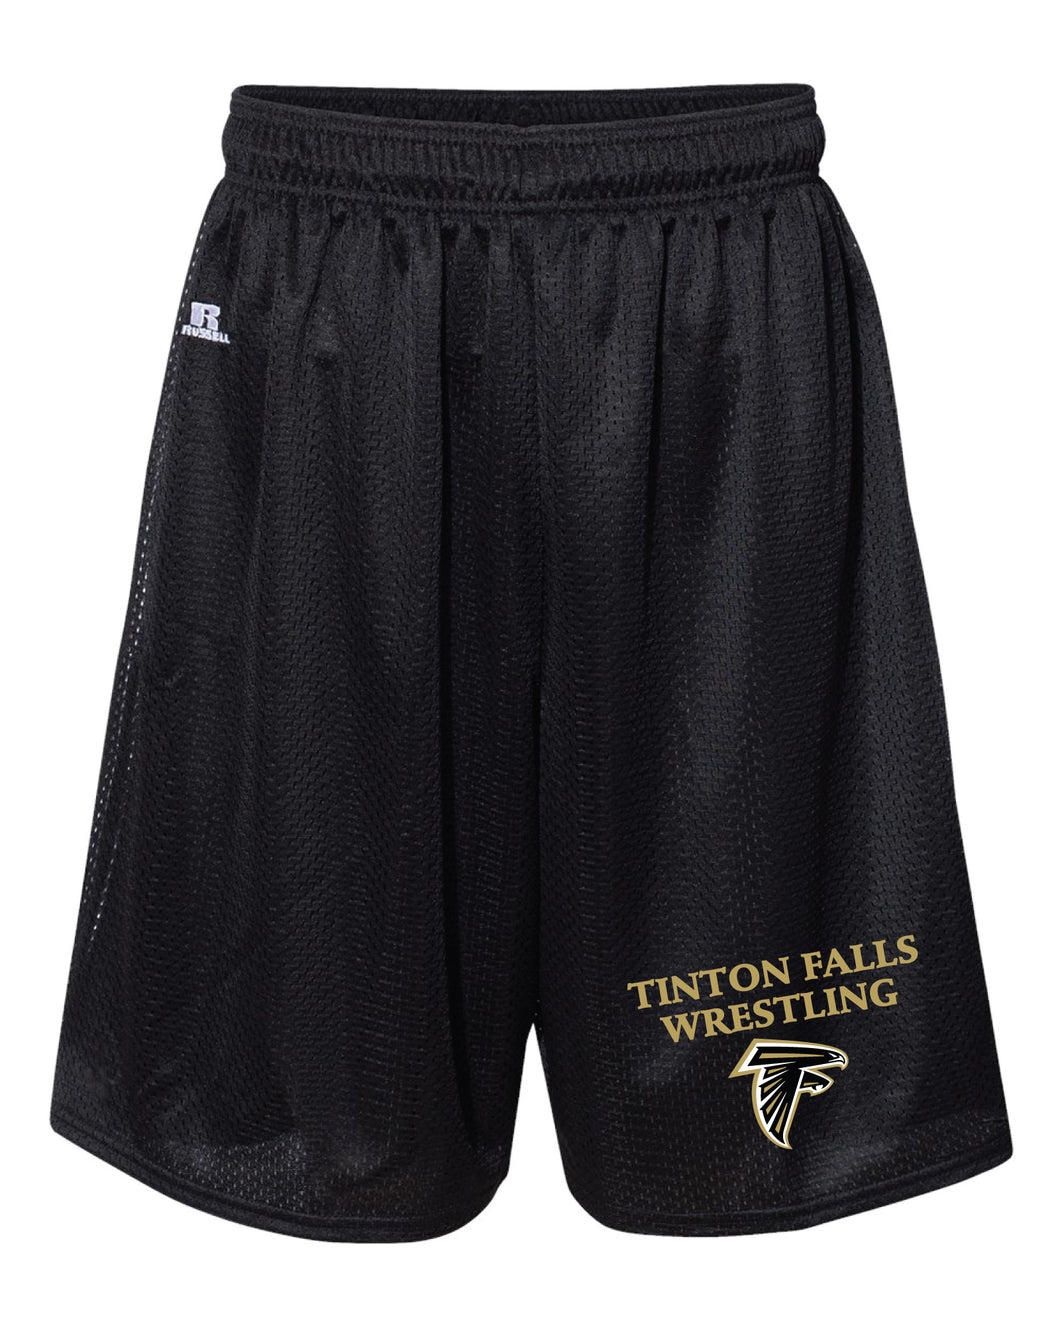 Tinton Falls Wrestling Russell Athletic Tech Shorts - Black - 5KounT